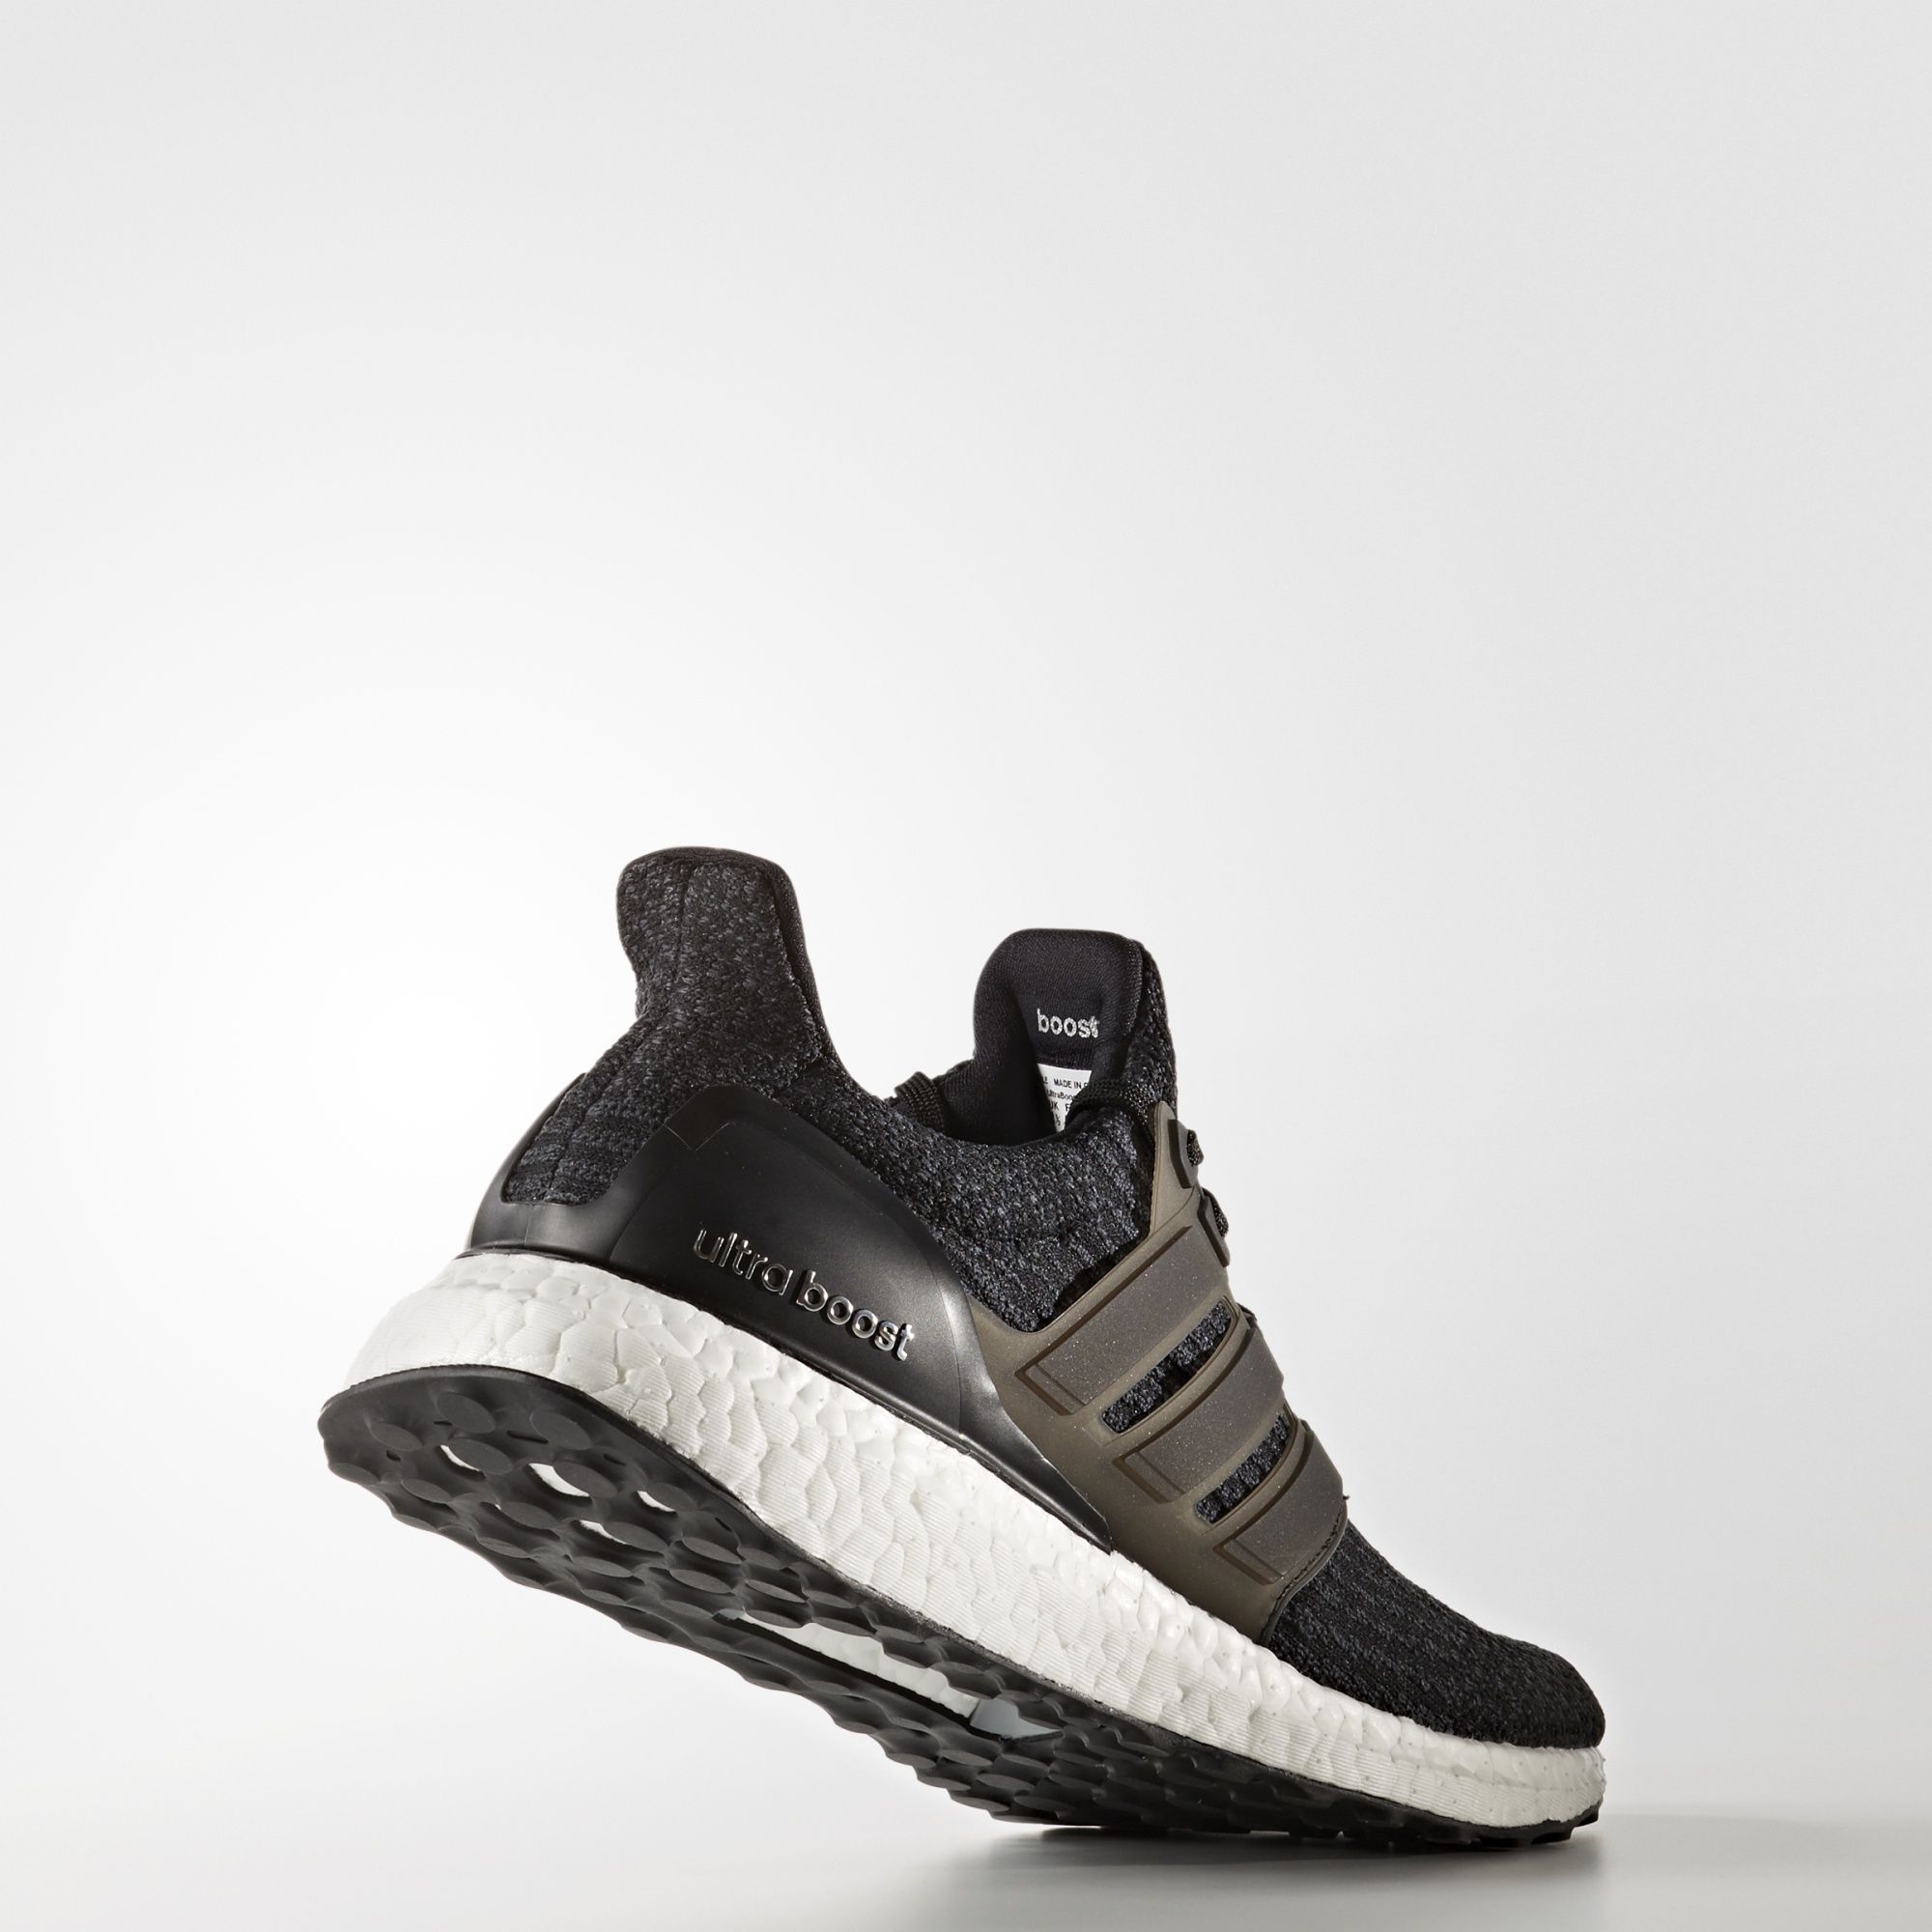 Adidas Ultra Boost 3.0
Core Black / Dark Grey